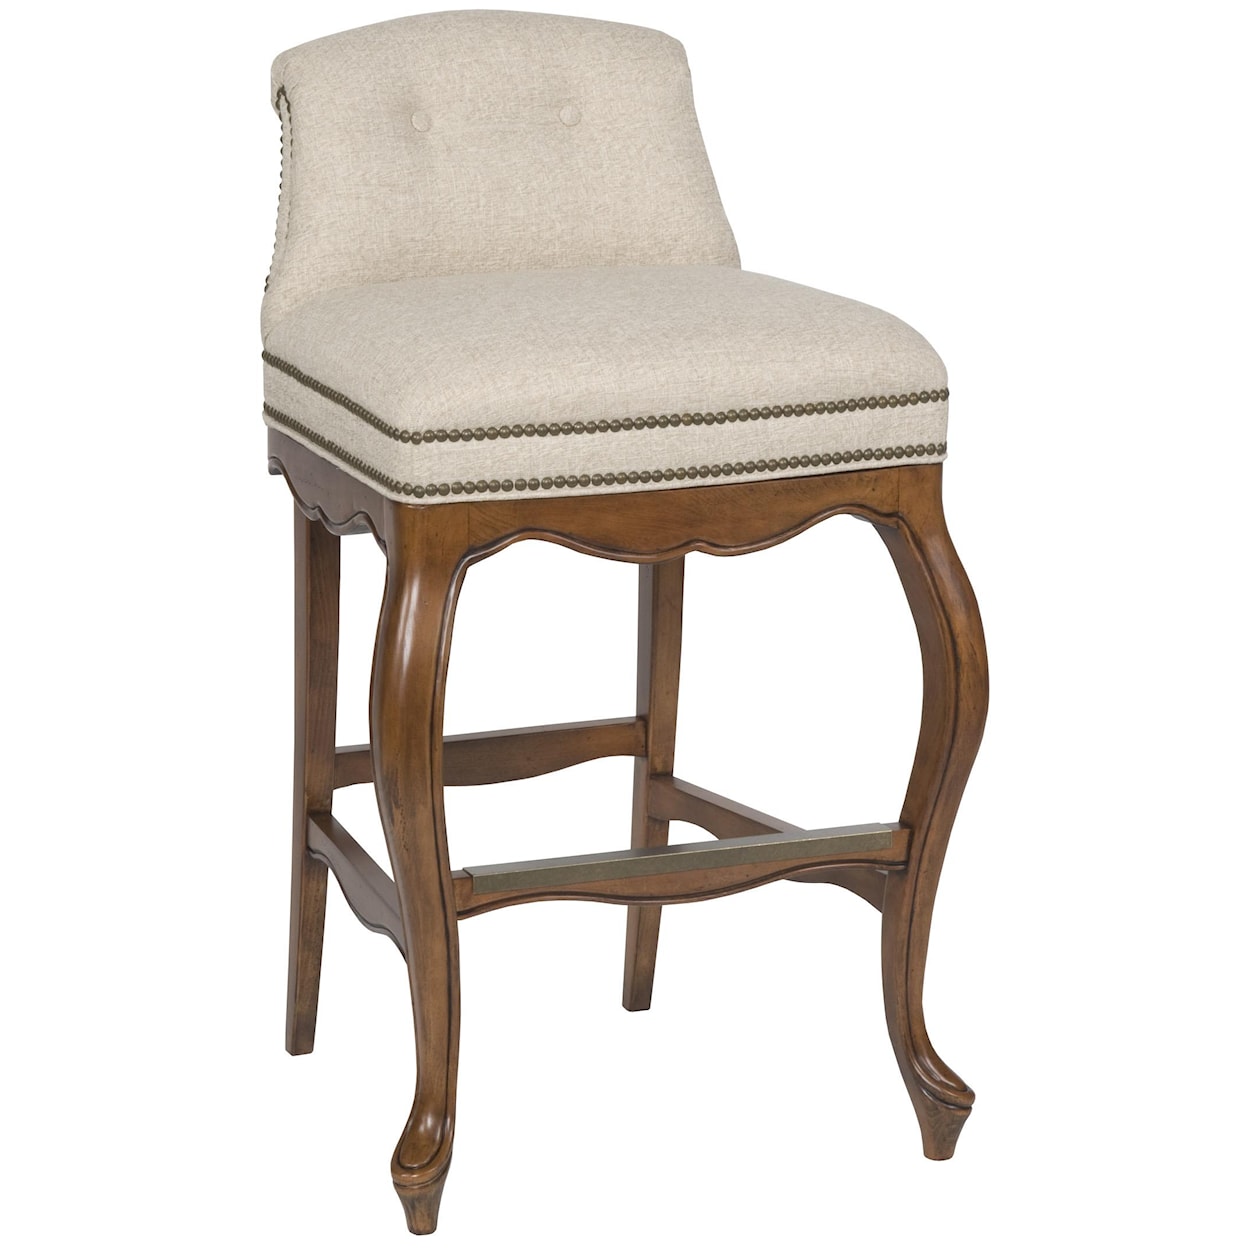 Vanguard Furniture Accent Chairs Bar Stool